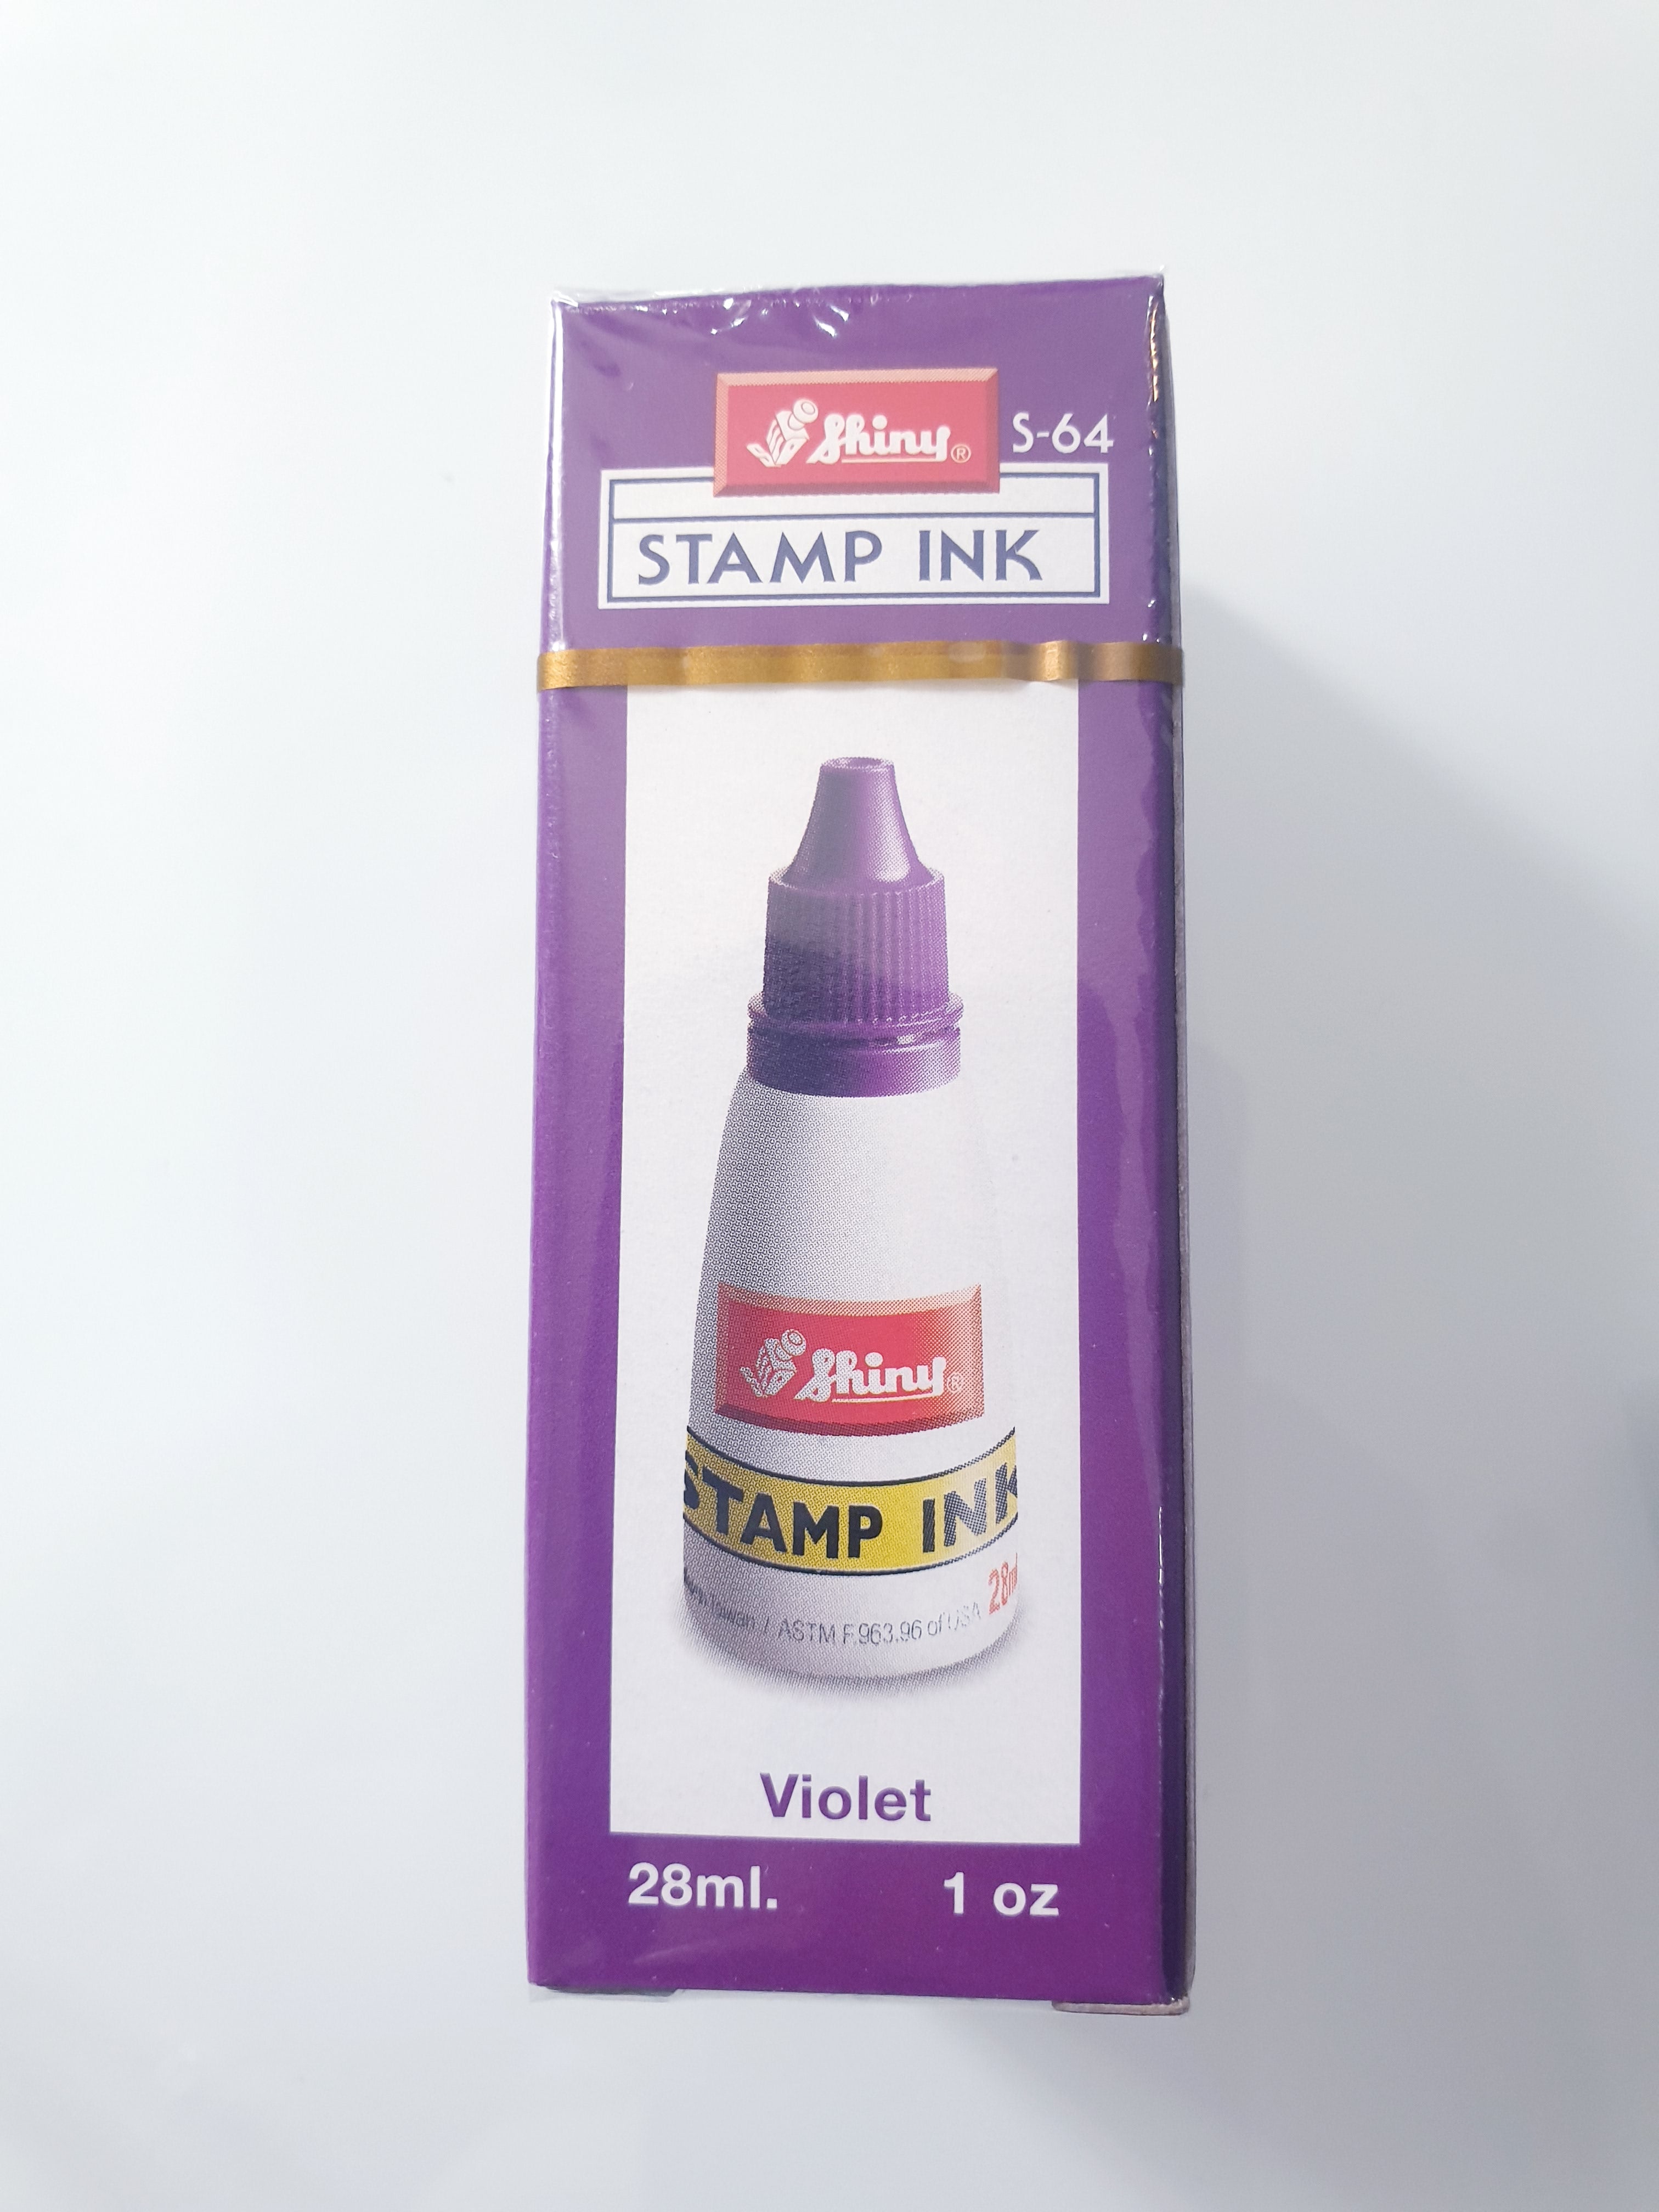 Copy of Shiny S-64 Stampad Ink,  Shiny Violet Ink, 28 ml.